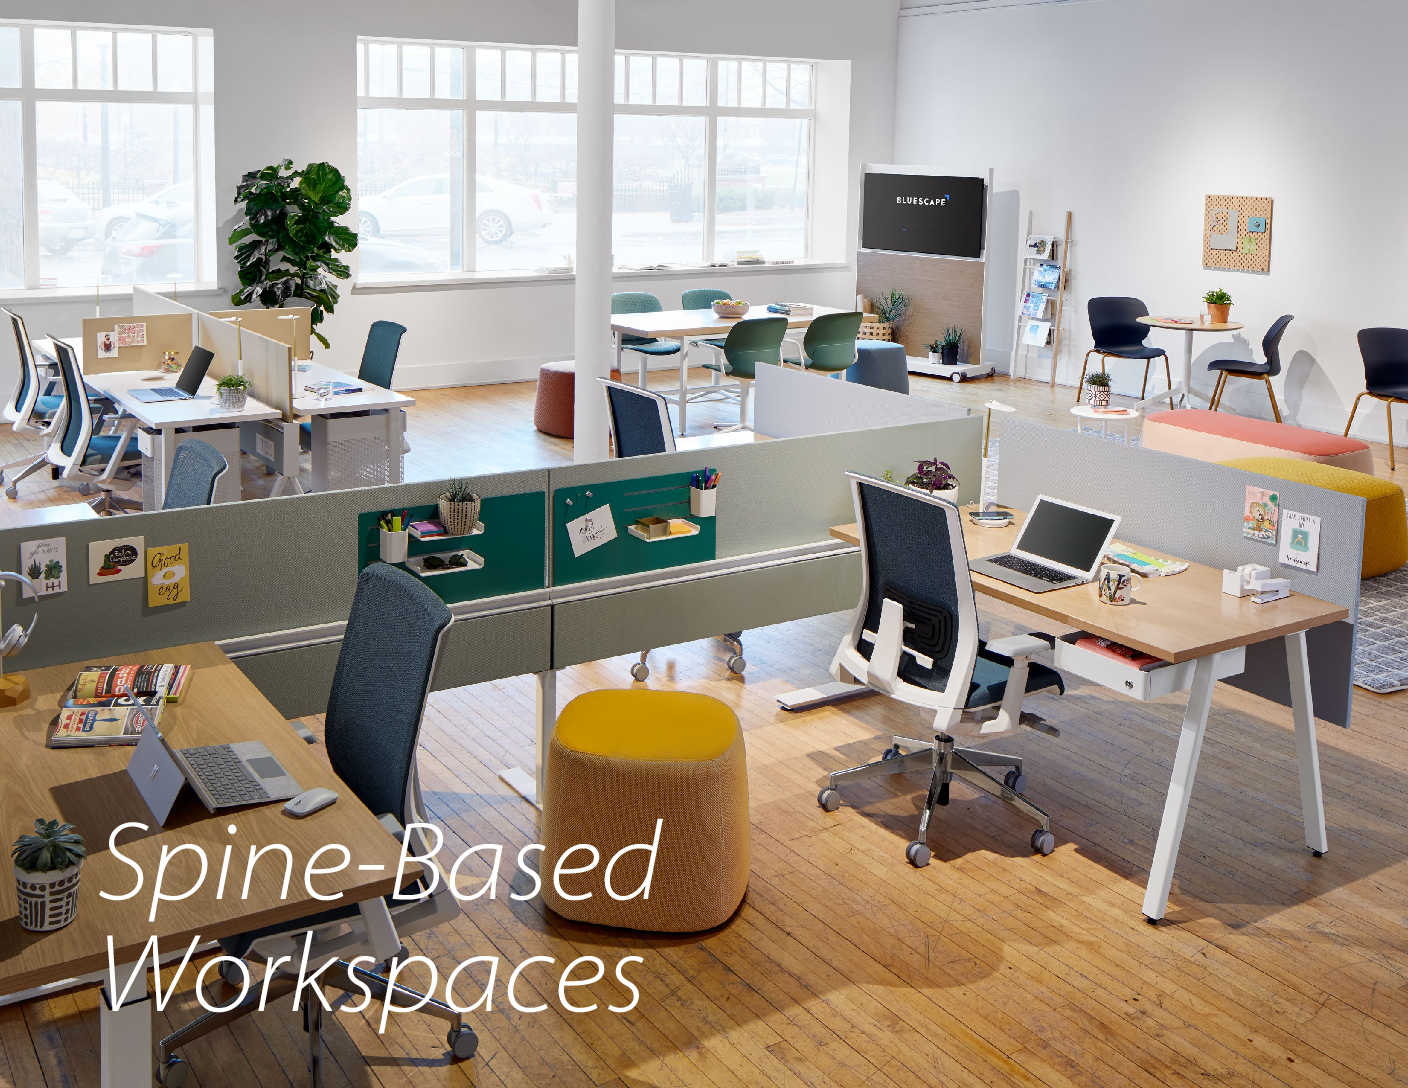 Spine-Based Workspaces